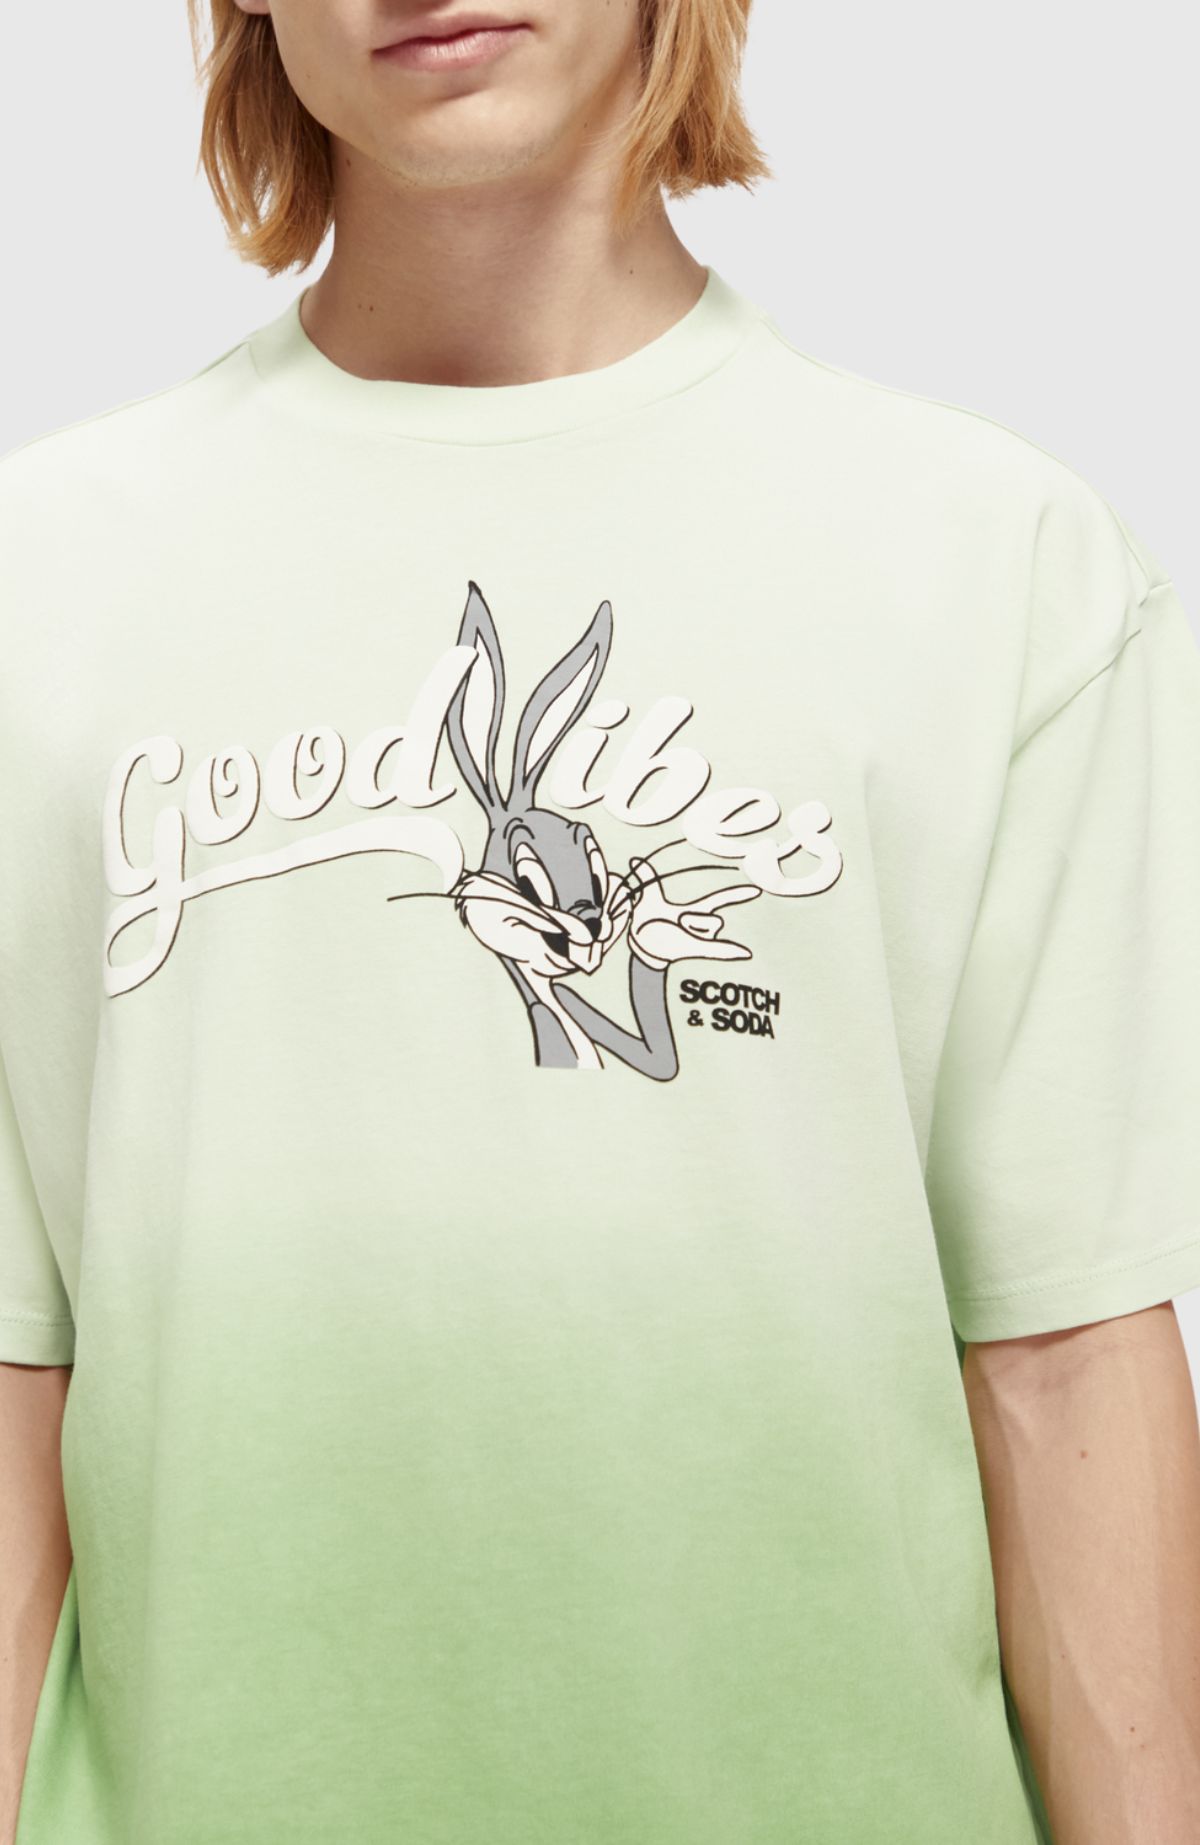 Bugs Bunny – Dip-dye short sleeved printed T-shirt